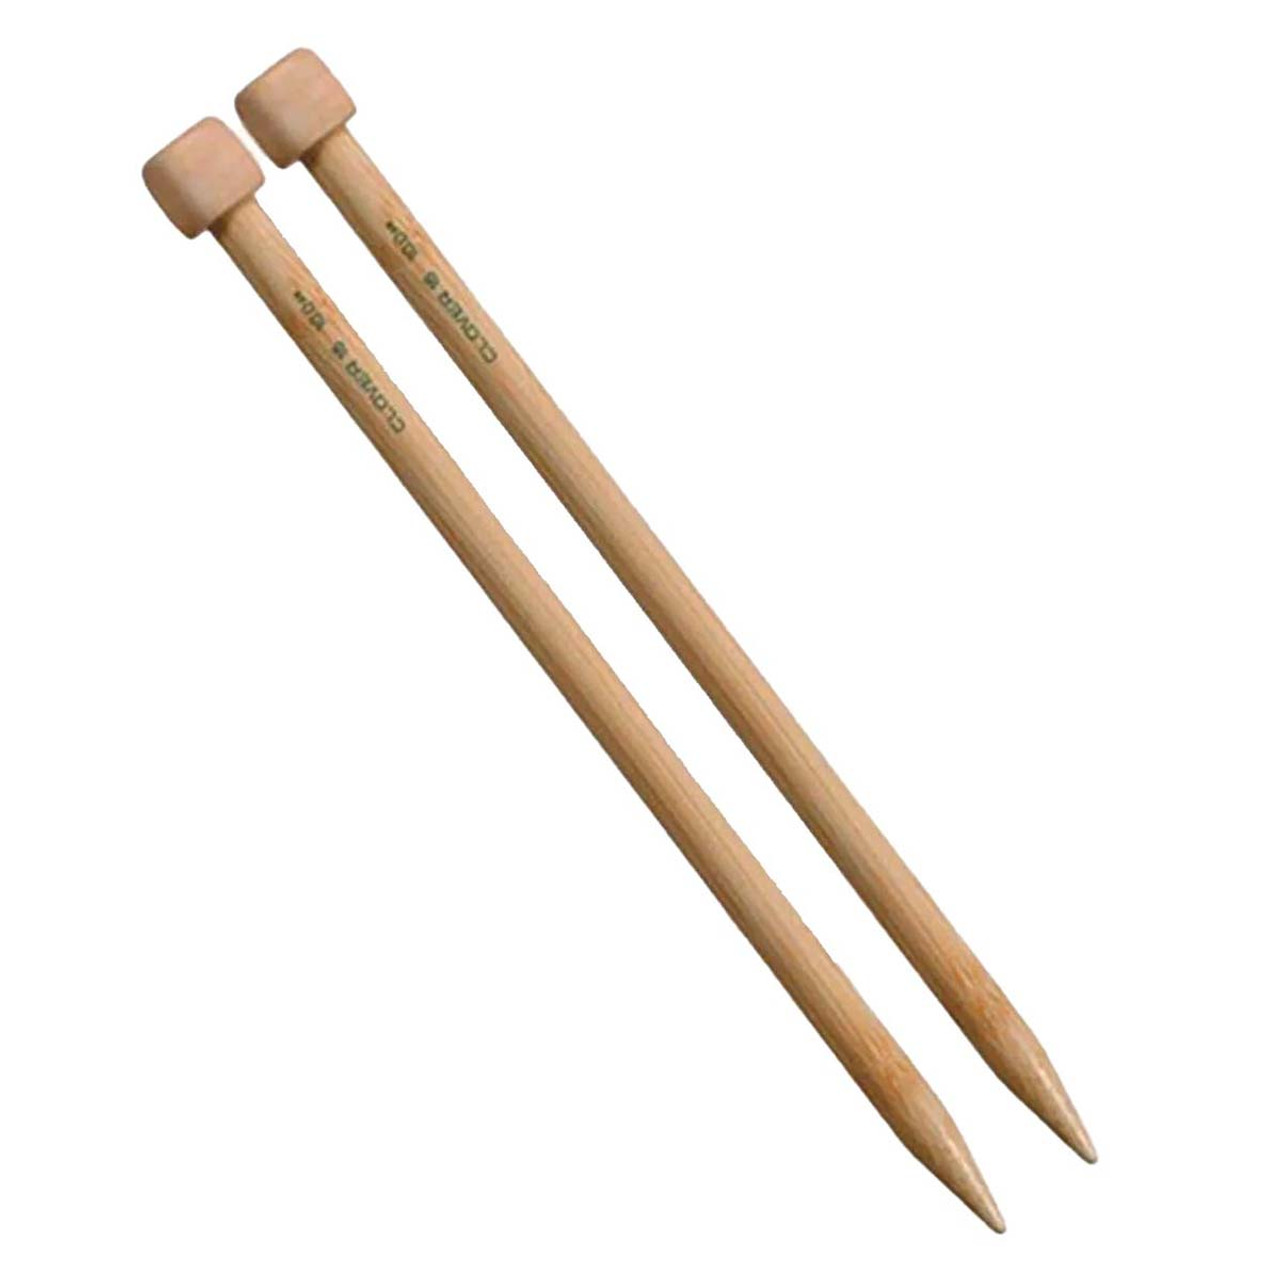 Clover Takumi Single Point Bamboo Knitting Needles - 9 Size 9